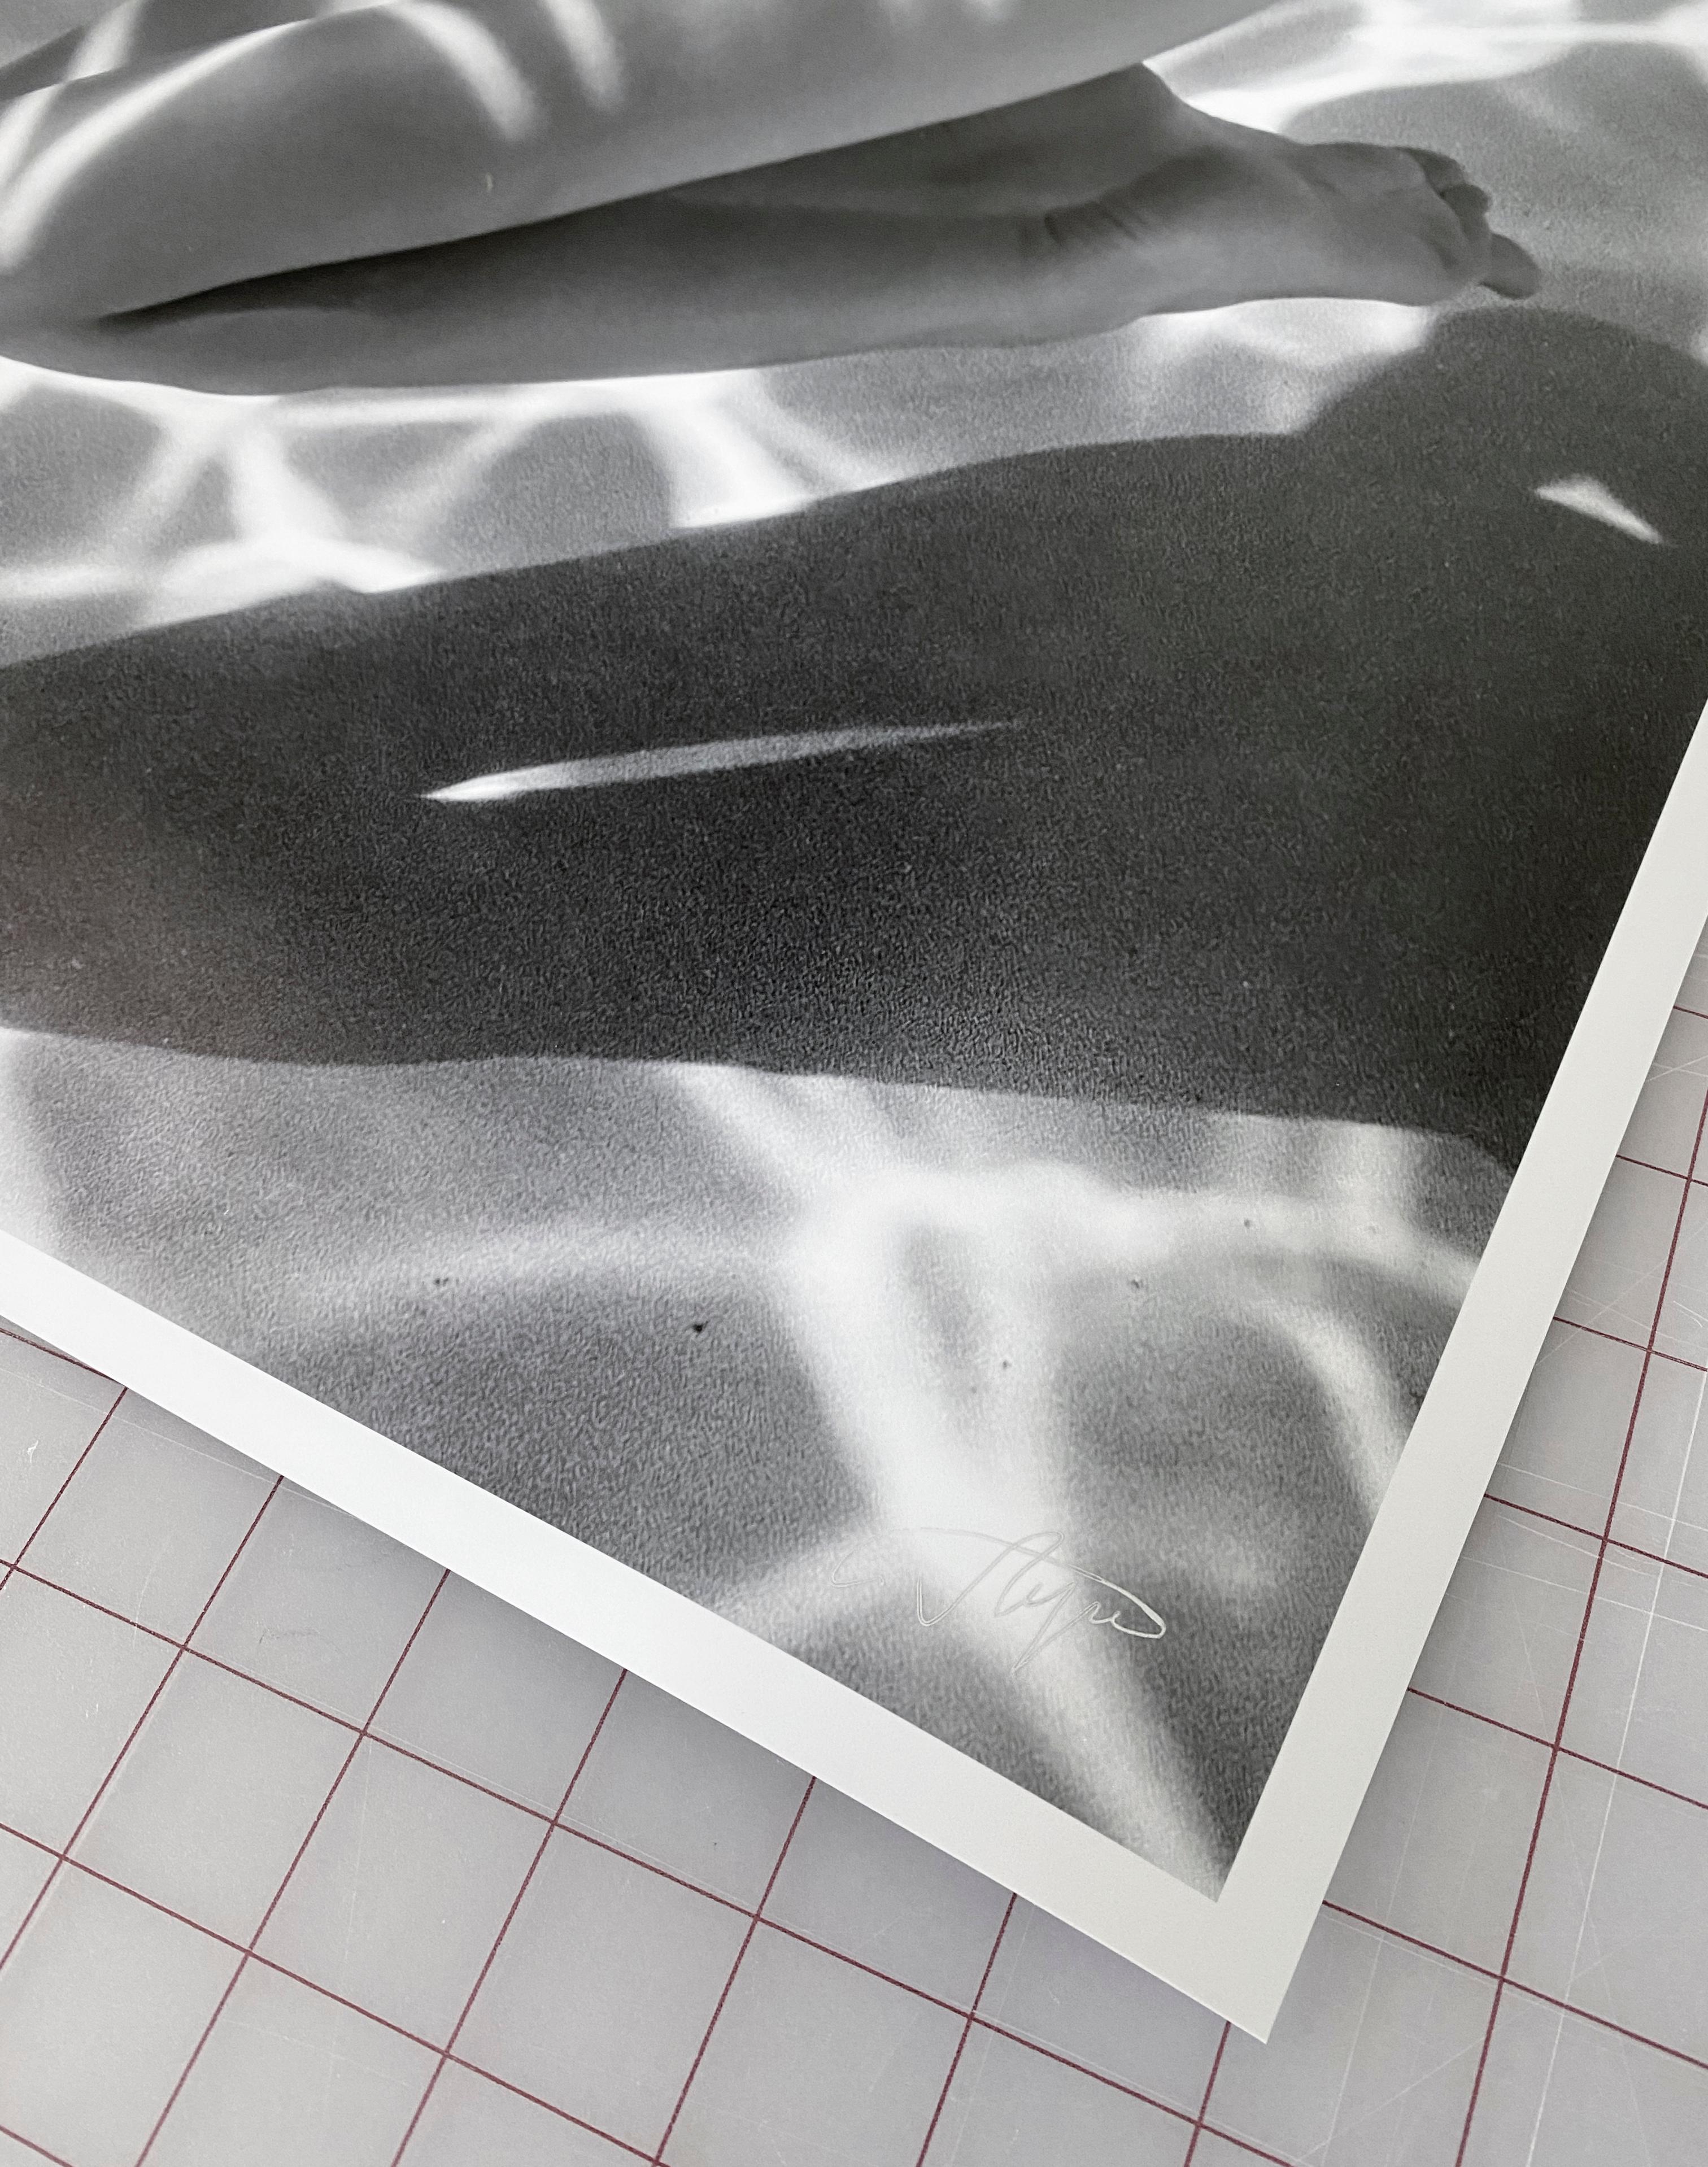 Wavering - underwater nude black & white photograph - archival pigment 24x18